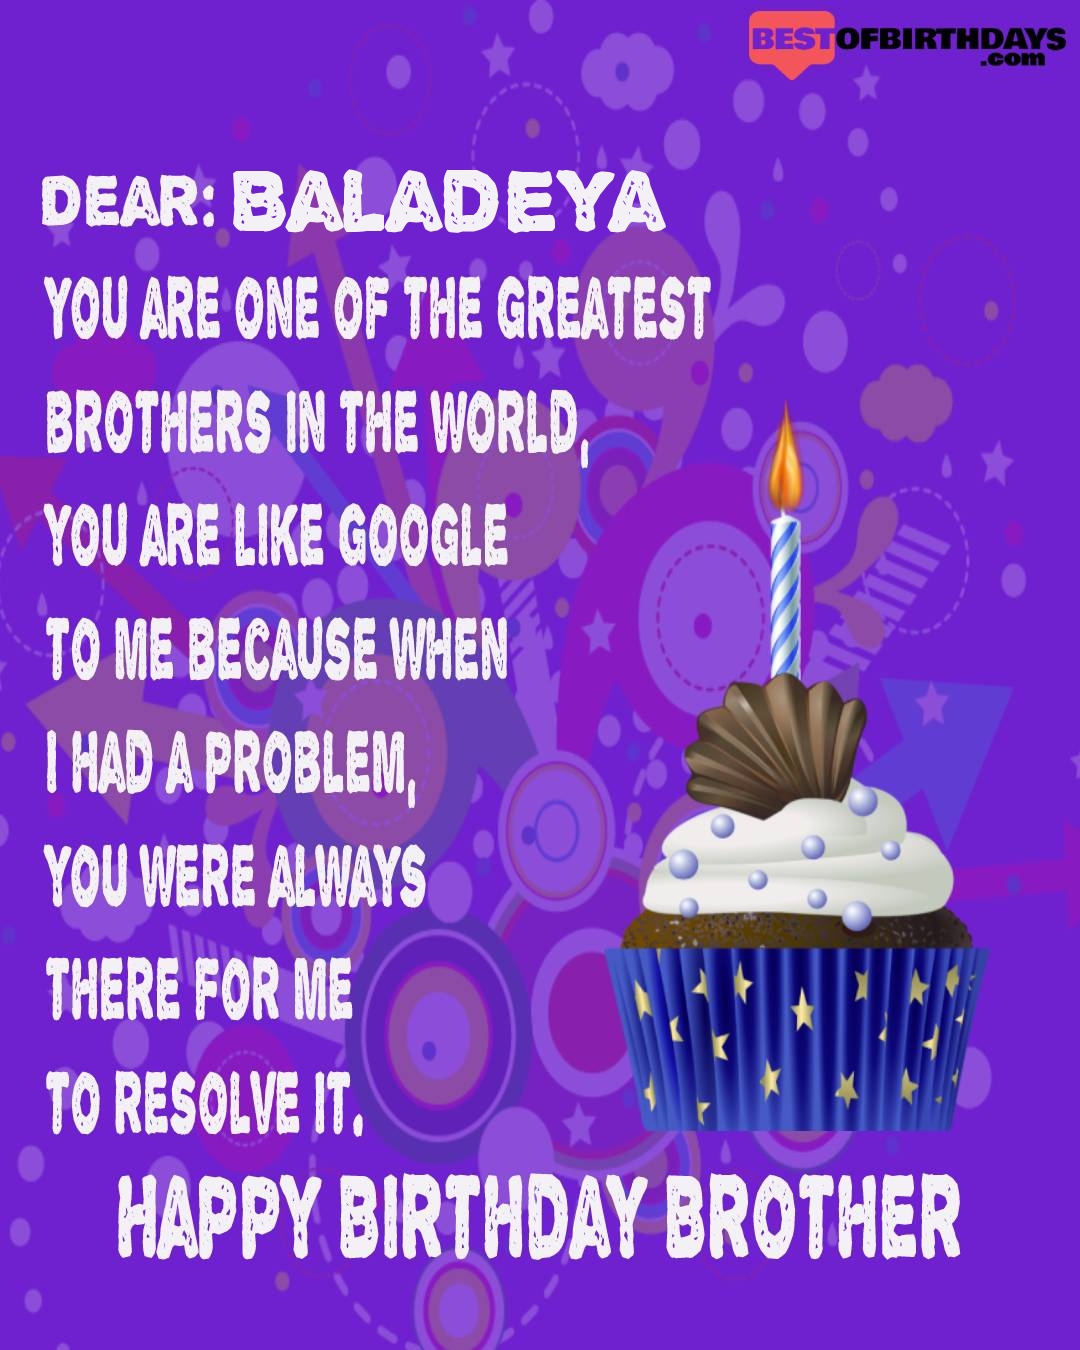 Happy birthday baladeya bhai brother bro